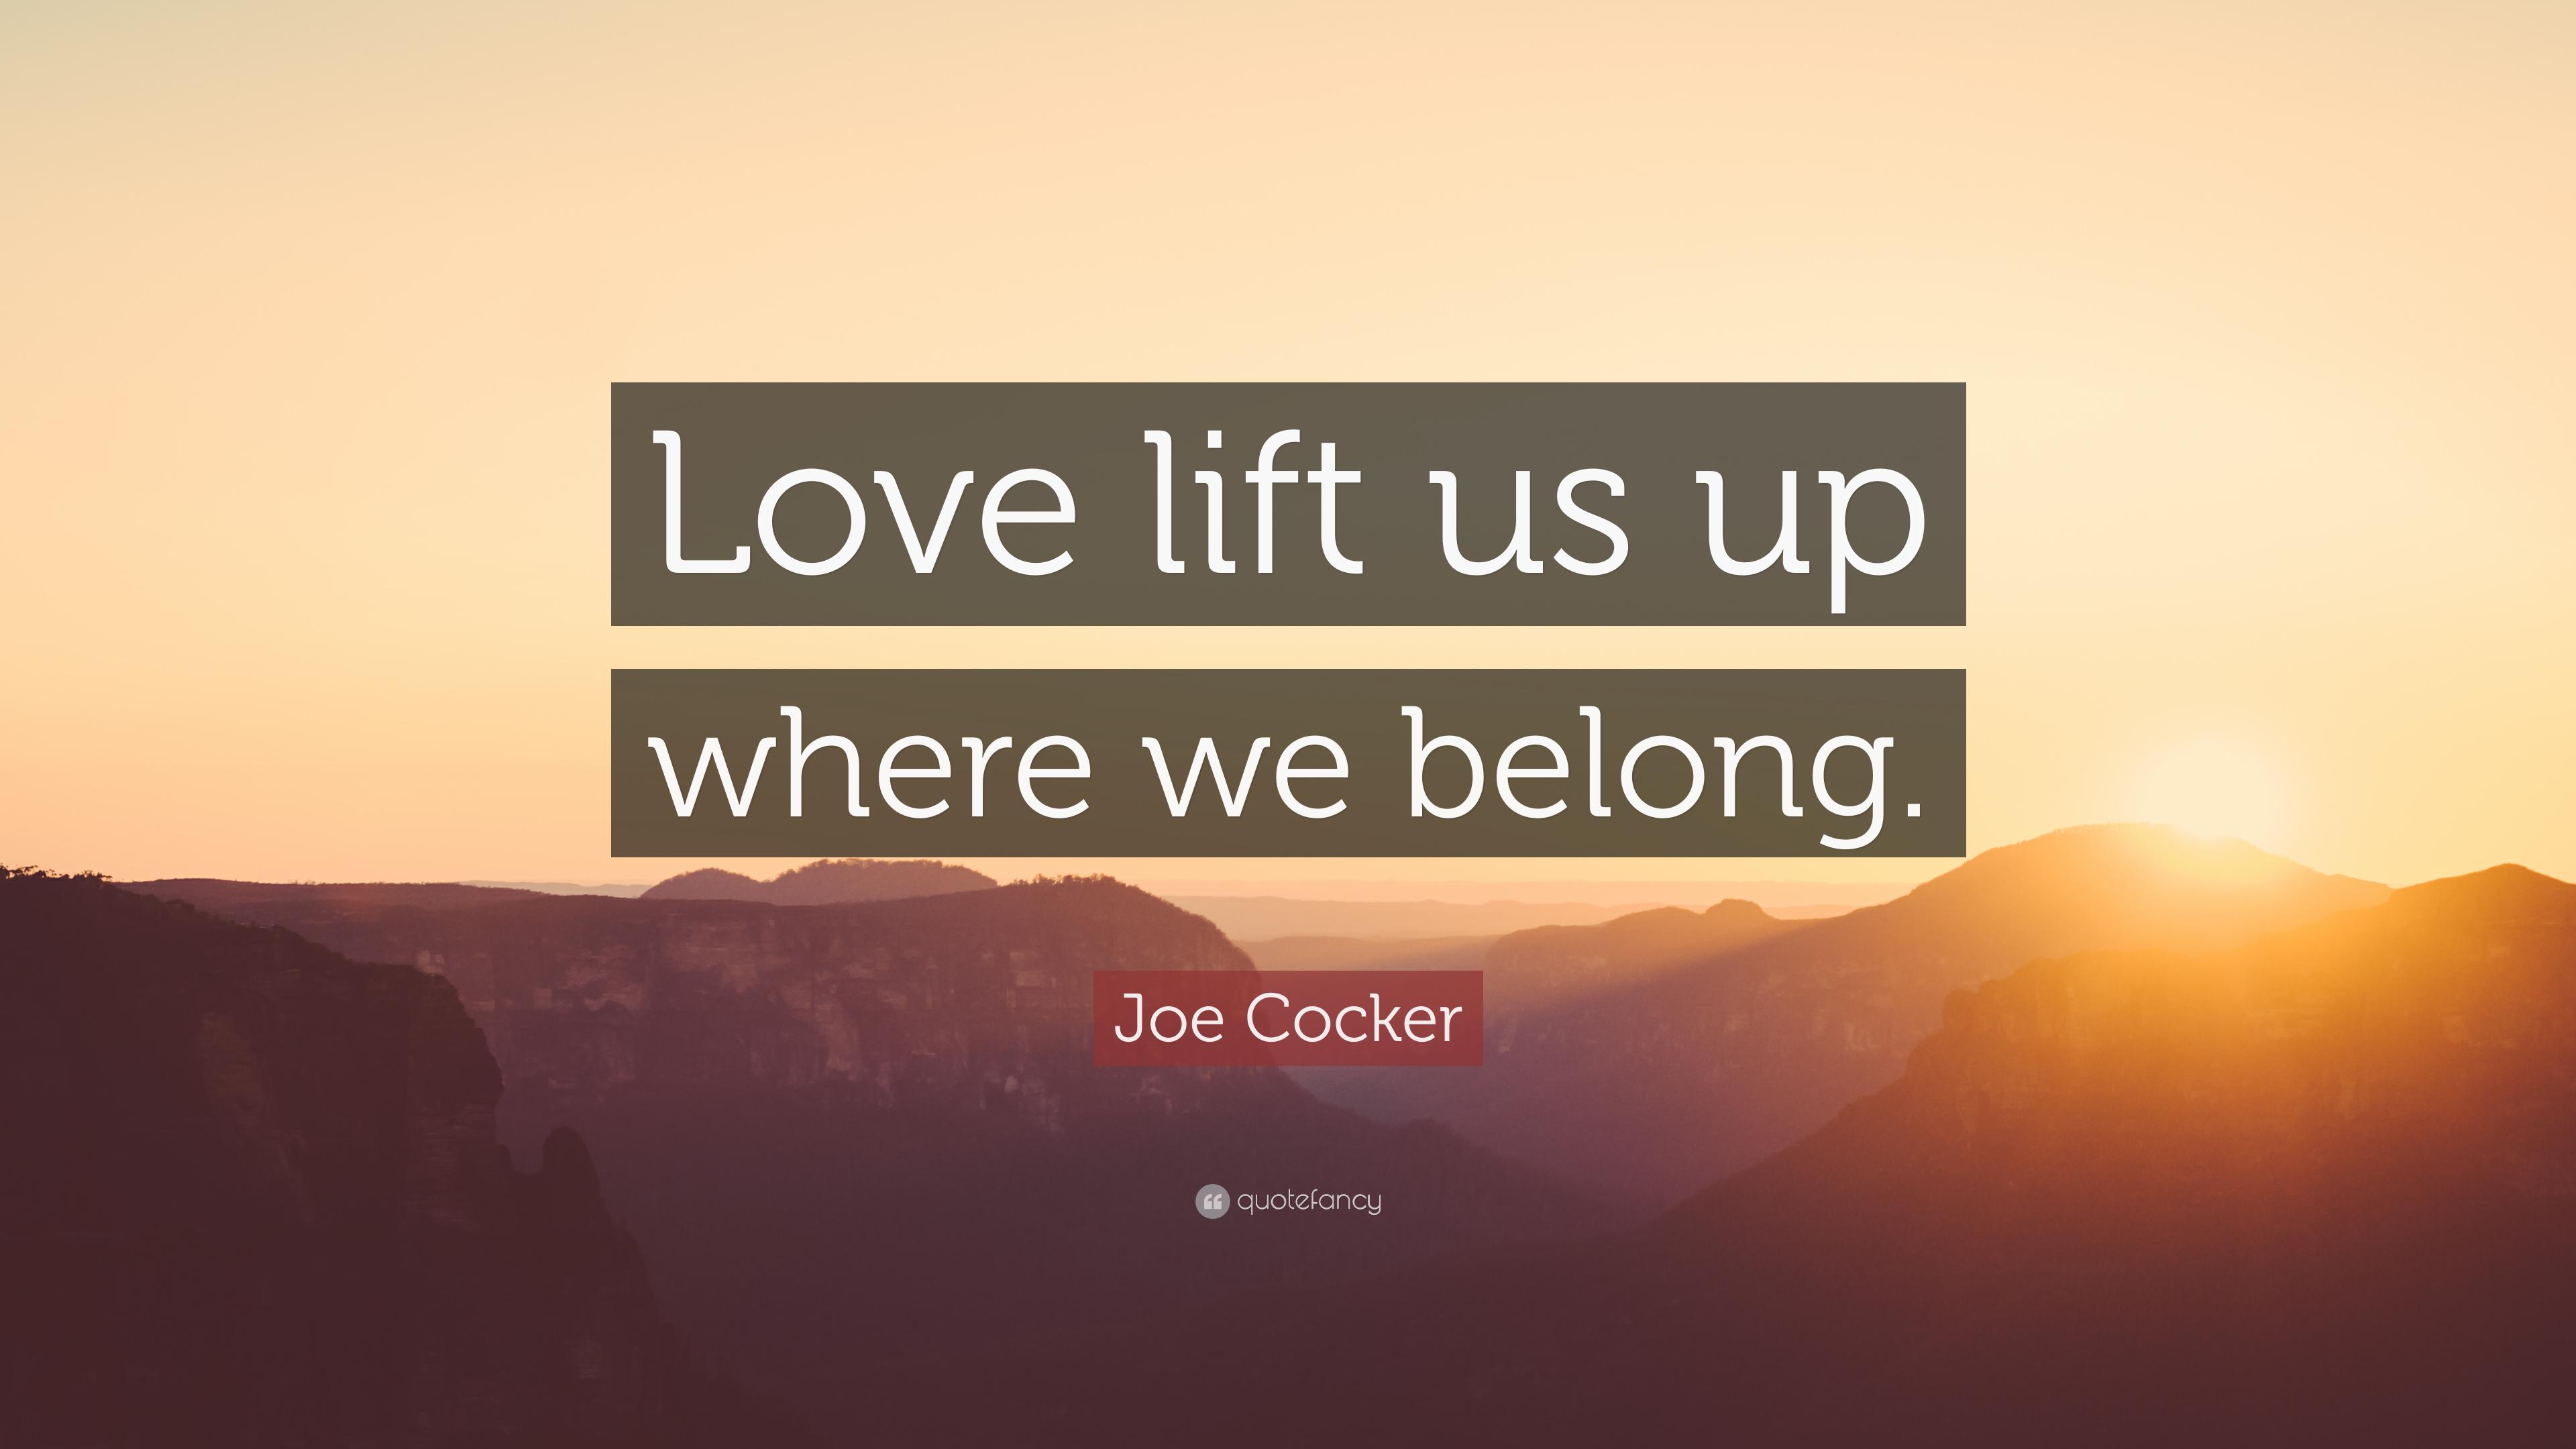 Joe Cocker Quote: “Love lift us up where we belong.” 7 wallpaper